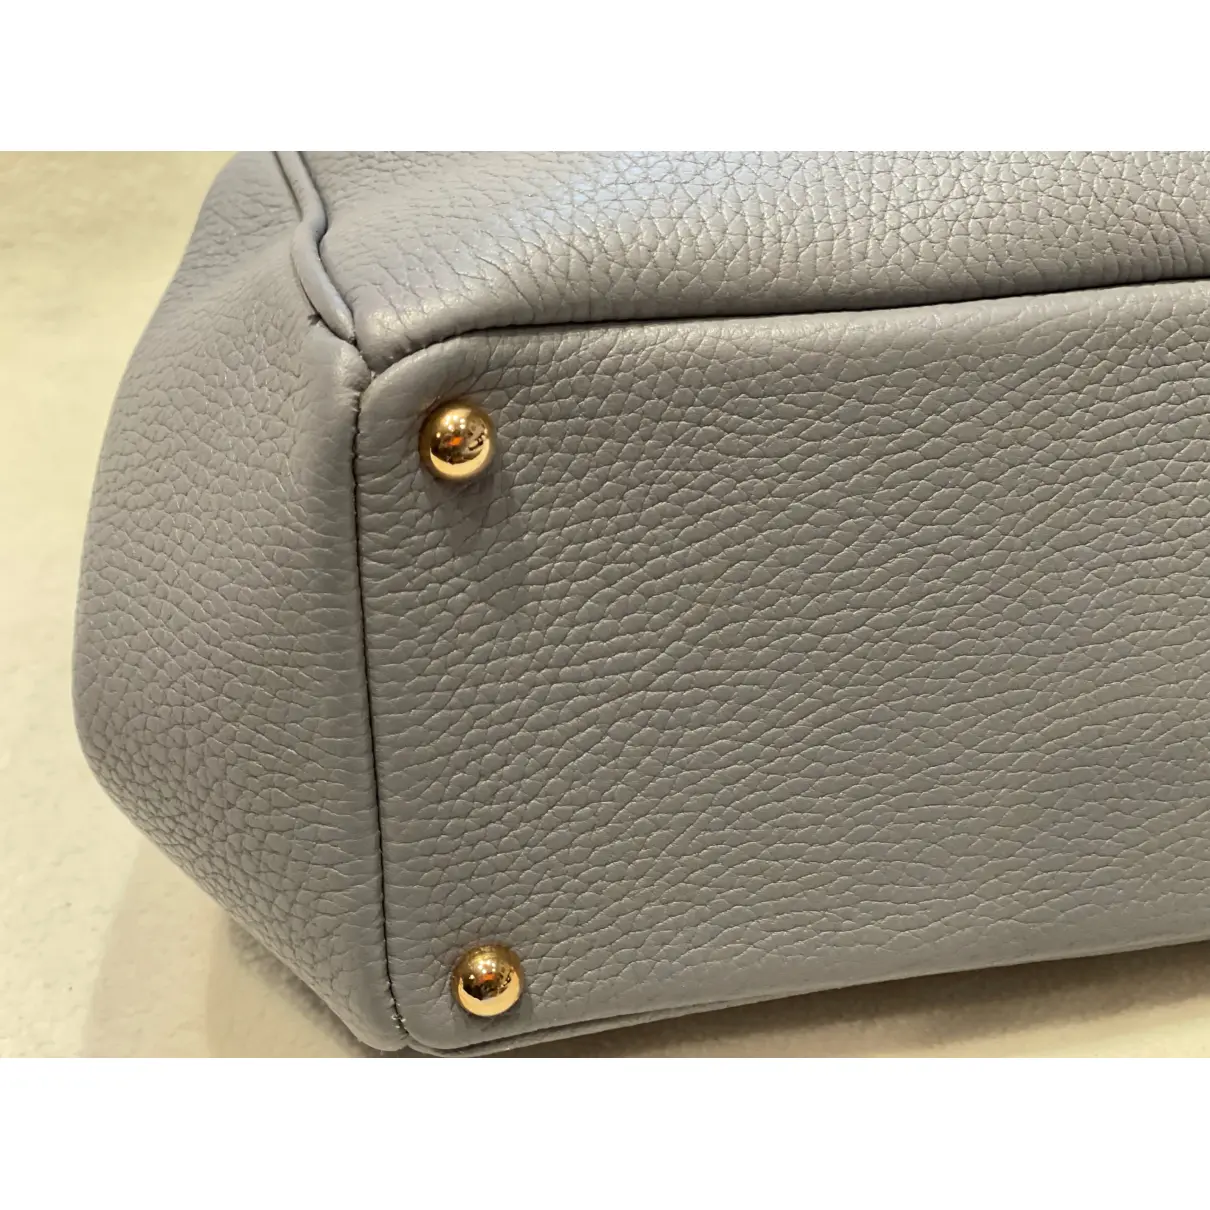 Leather handbag Cambridge Satchel Company